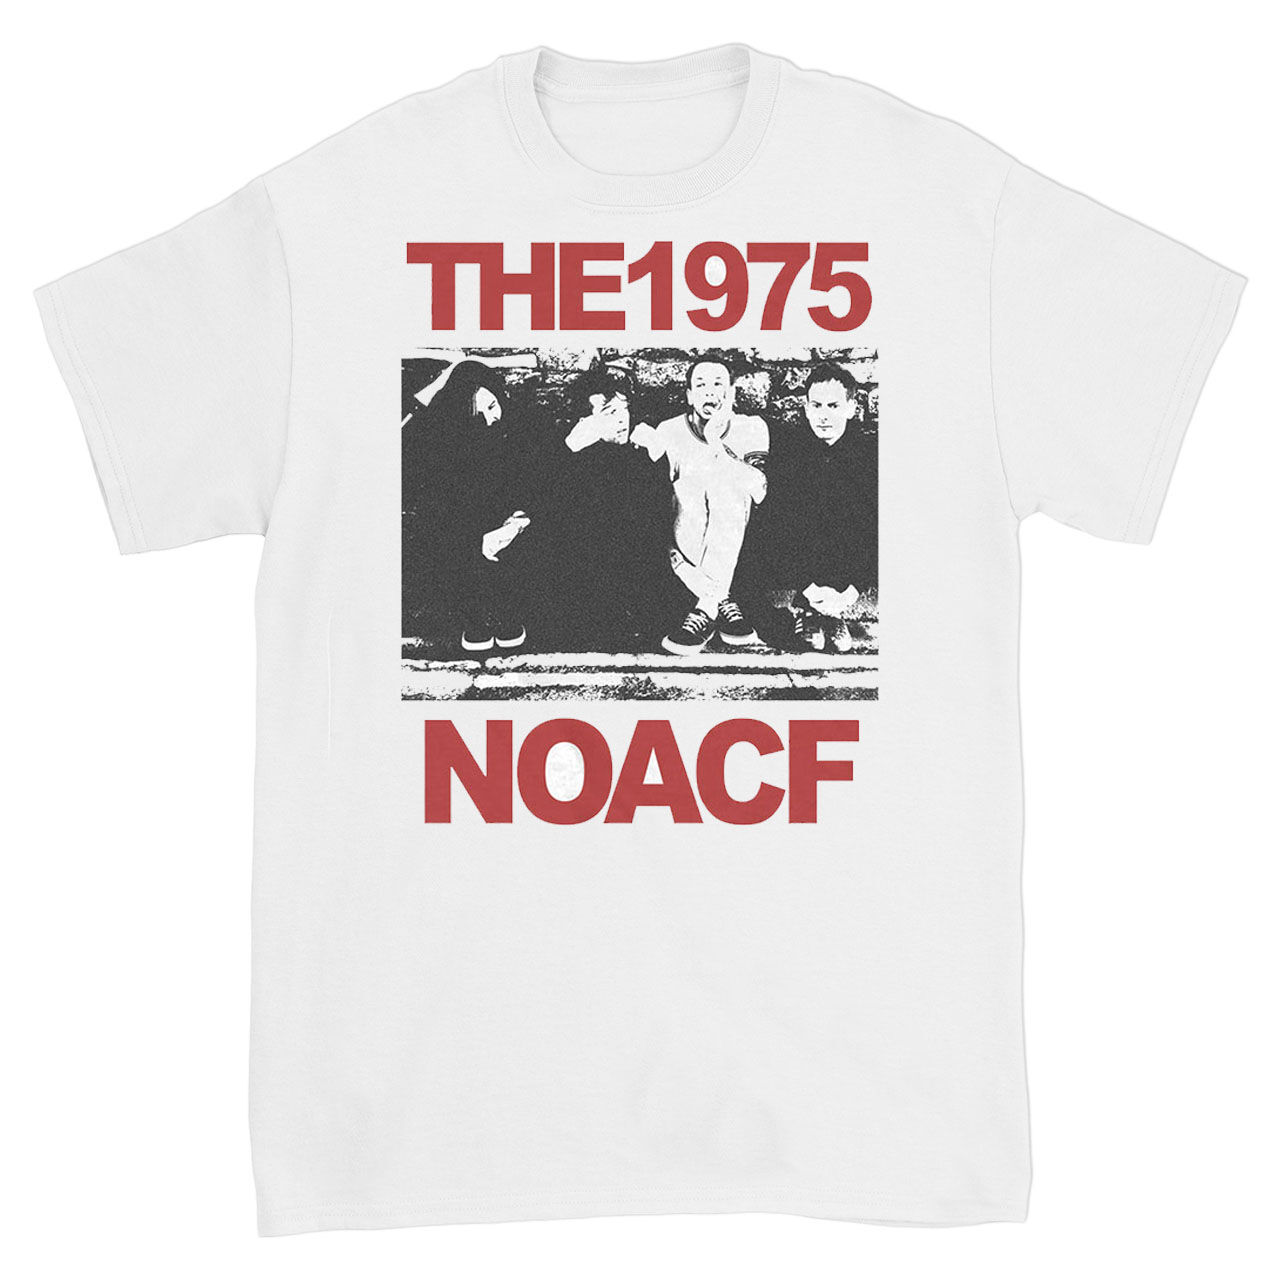 THE 1975 NOACF Photo White Tshirt